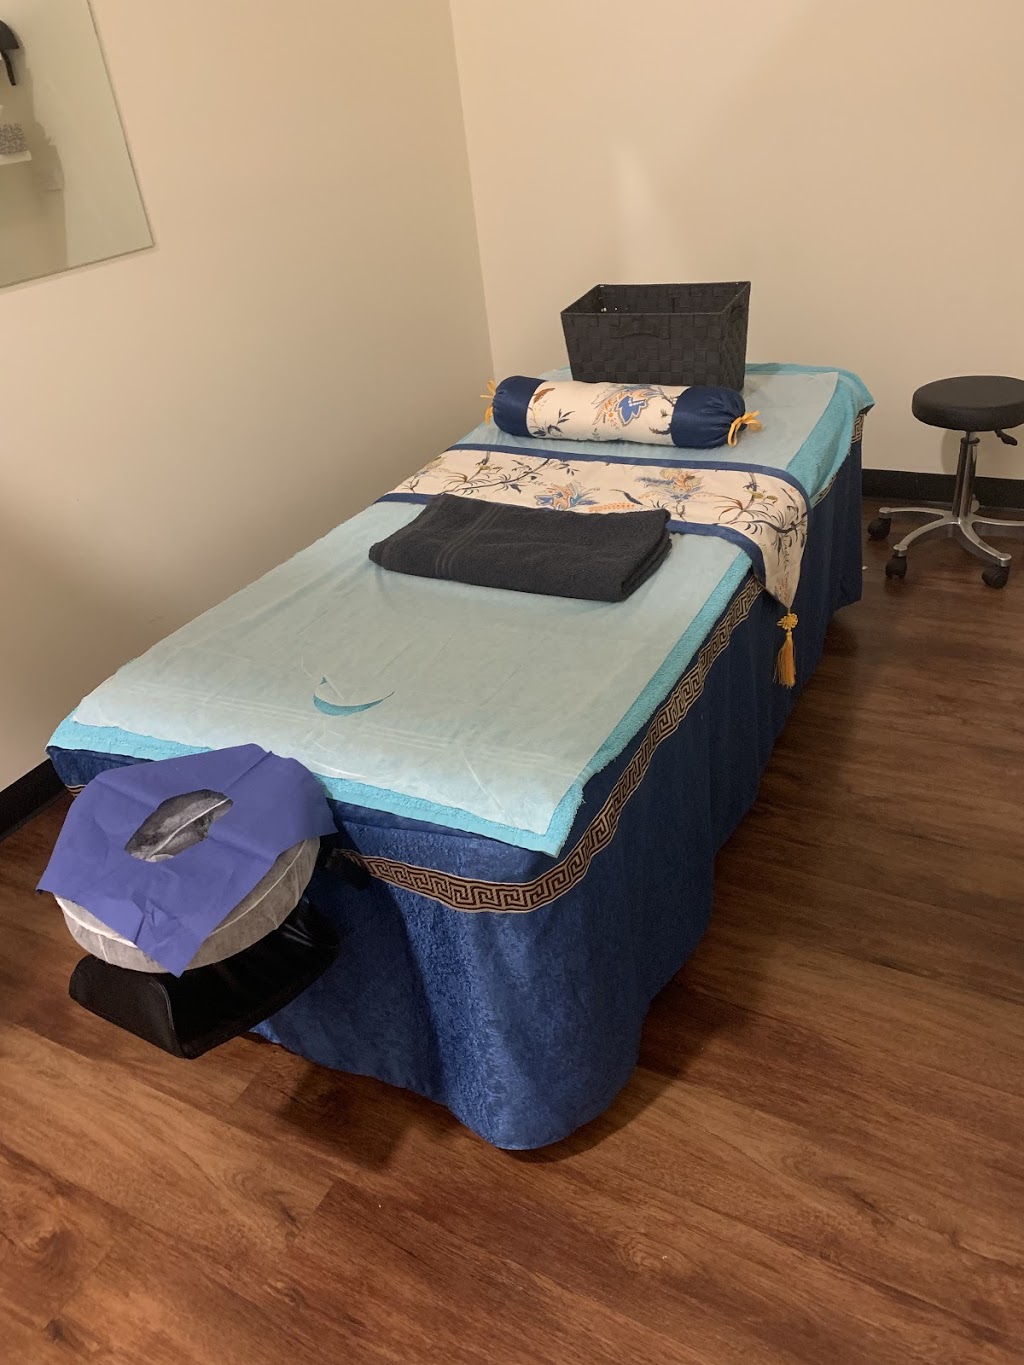 Lucys Massage Therapy | spa | AU Queensland Parkhurst Yaamba Road Shop 3, parkhurst town Centre, Parkhurst QLD 4702, Australia | 0488018398 OR +61 488 018 398